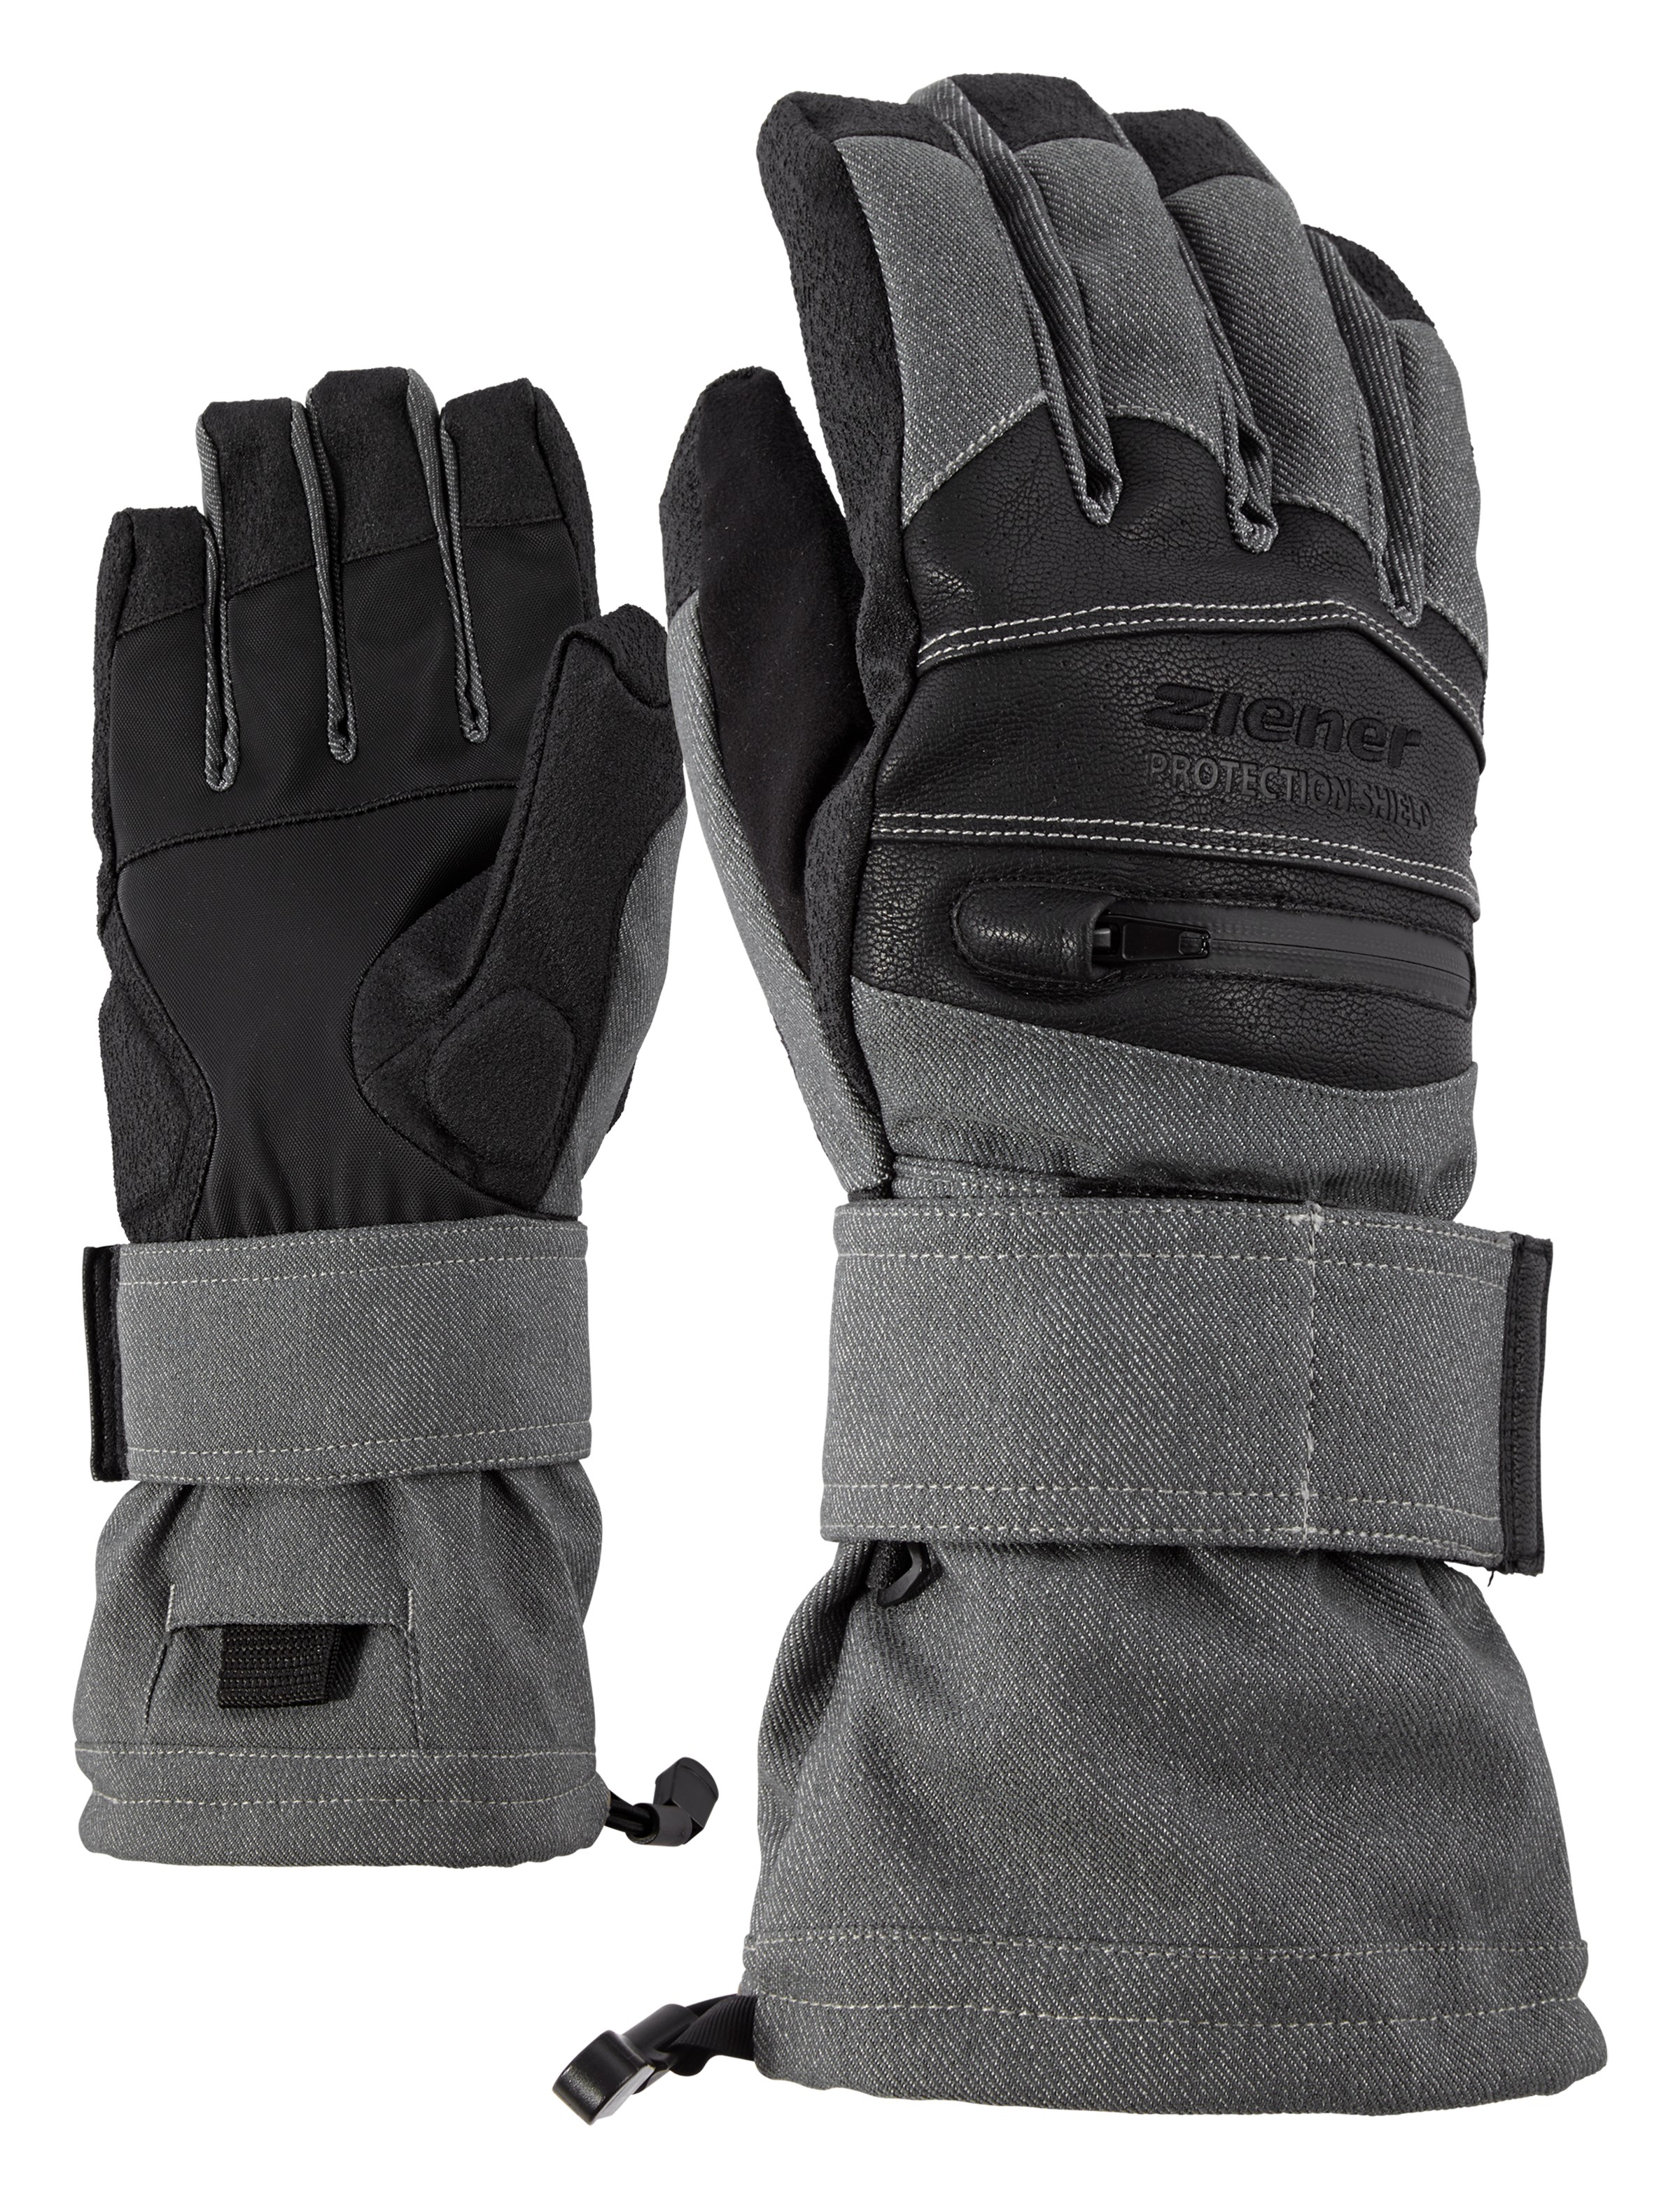 Ziener Midlife AS(R) Glove 17/18 -grey denim